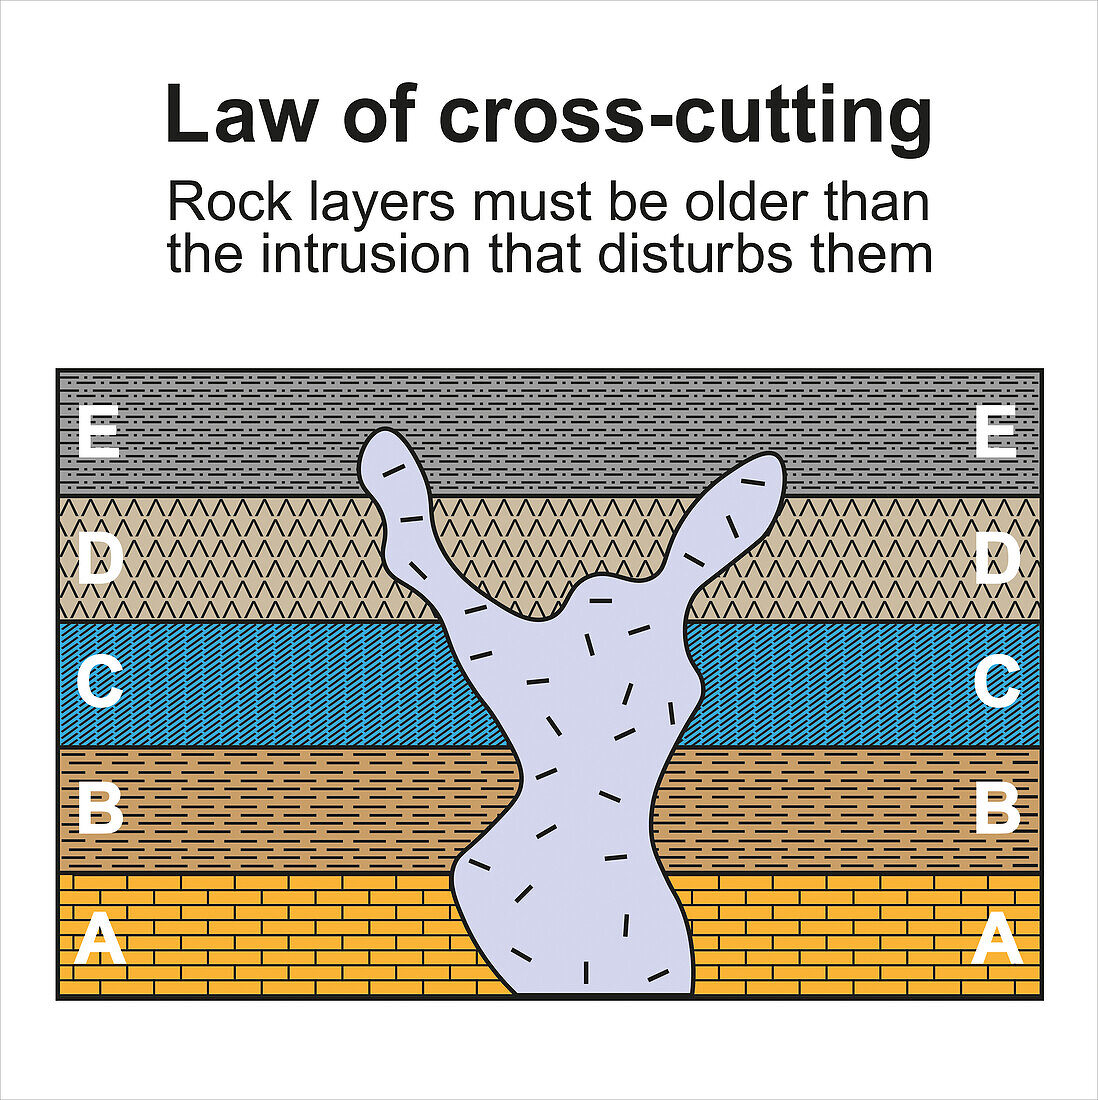 Law of cross-cutting, illustration